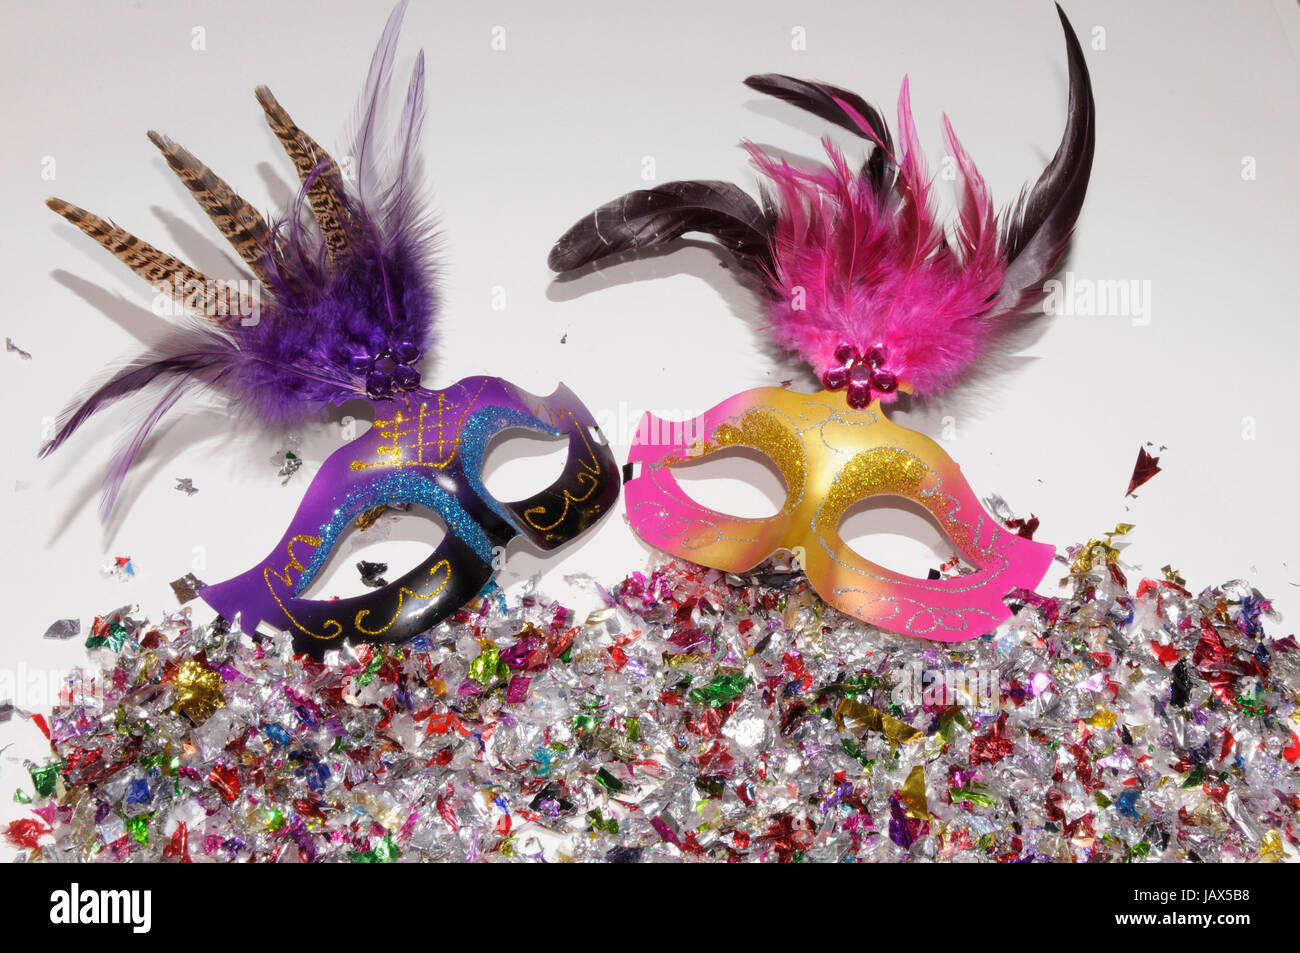 karneval, fasching, fastnacht, silvester, sylvester, neujahr, feiern,  stimmung, maske, laune, bunt, helau, alaaf, jubliäum, geburtstag,  verkleidung, maskieren, party, faschingsmaske, karnevalsmaske, konfetti  Stock Photo - Alamy